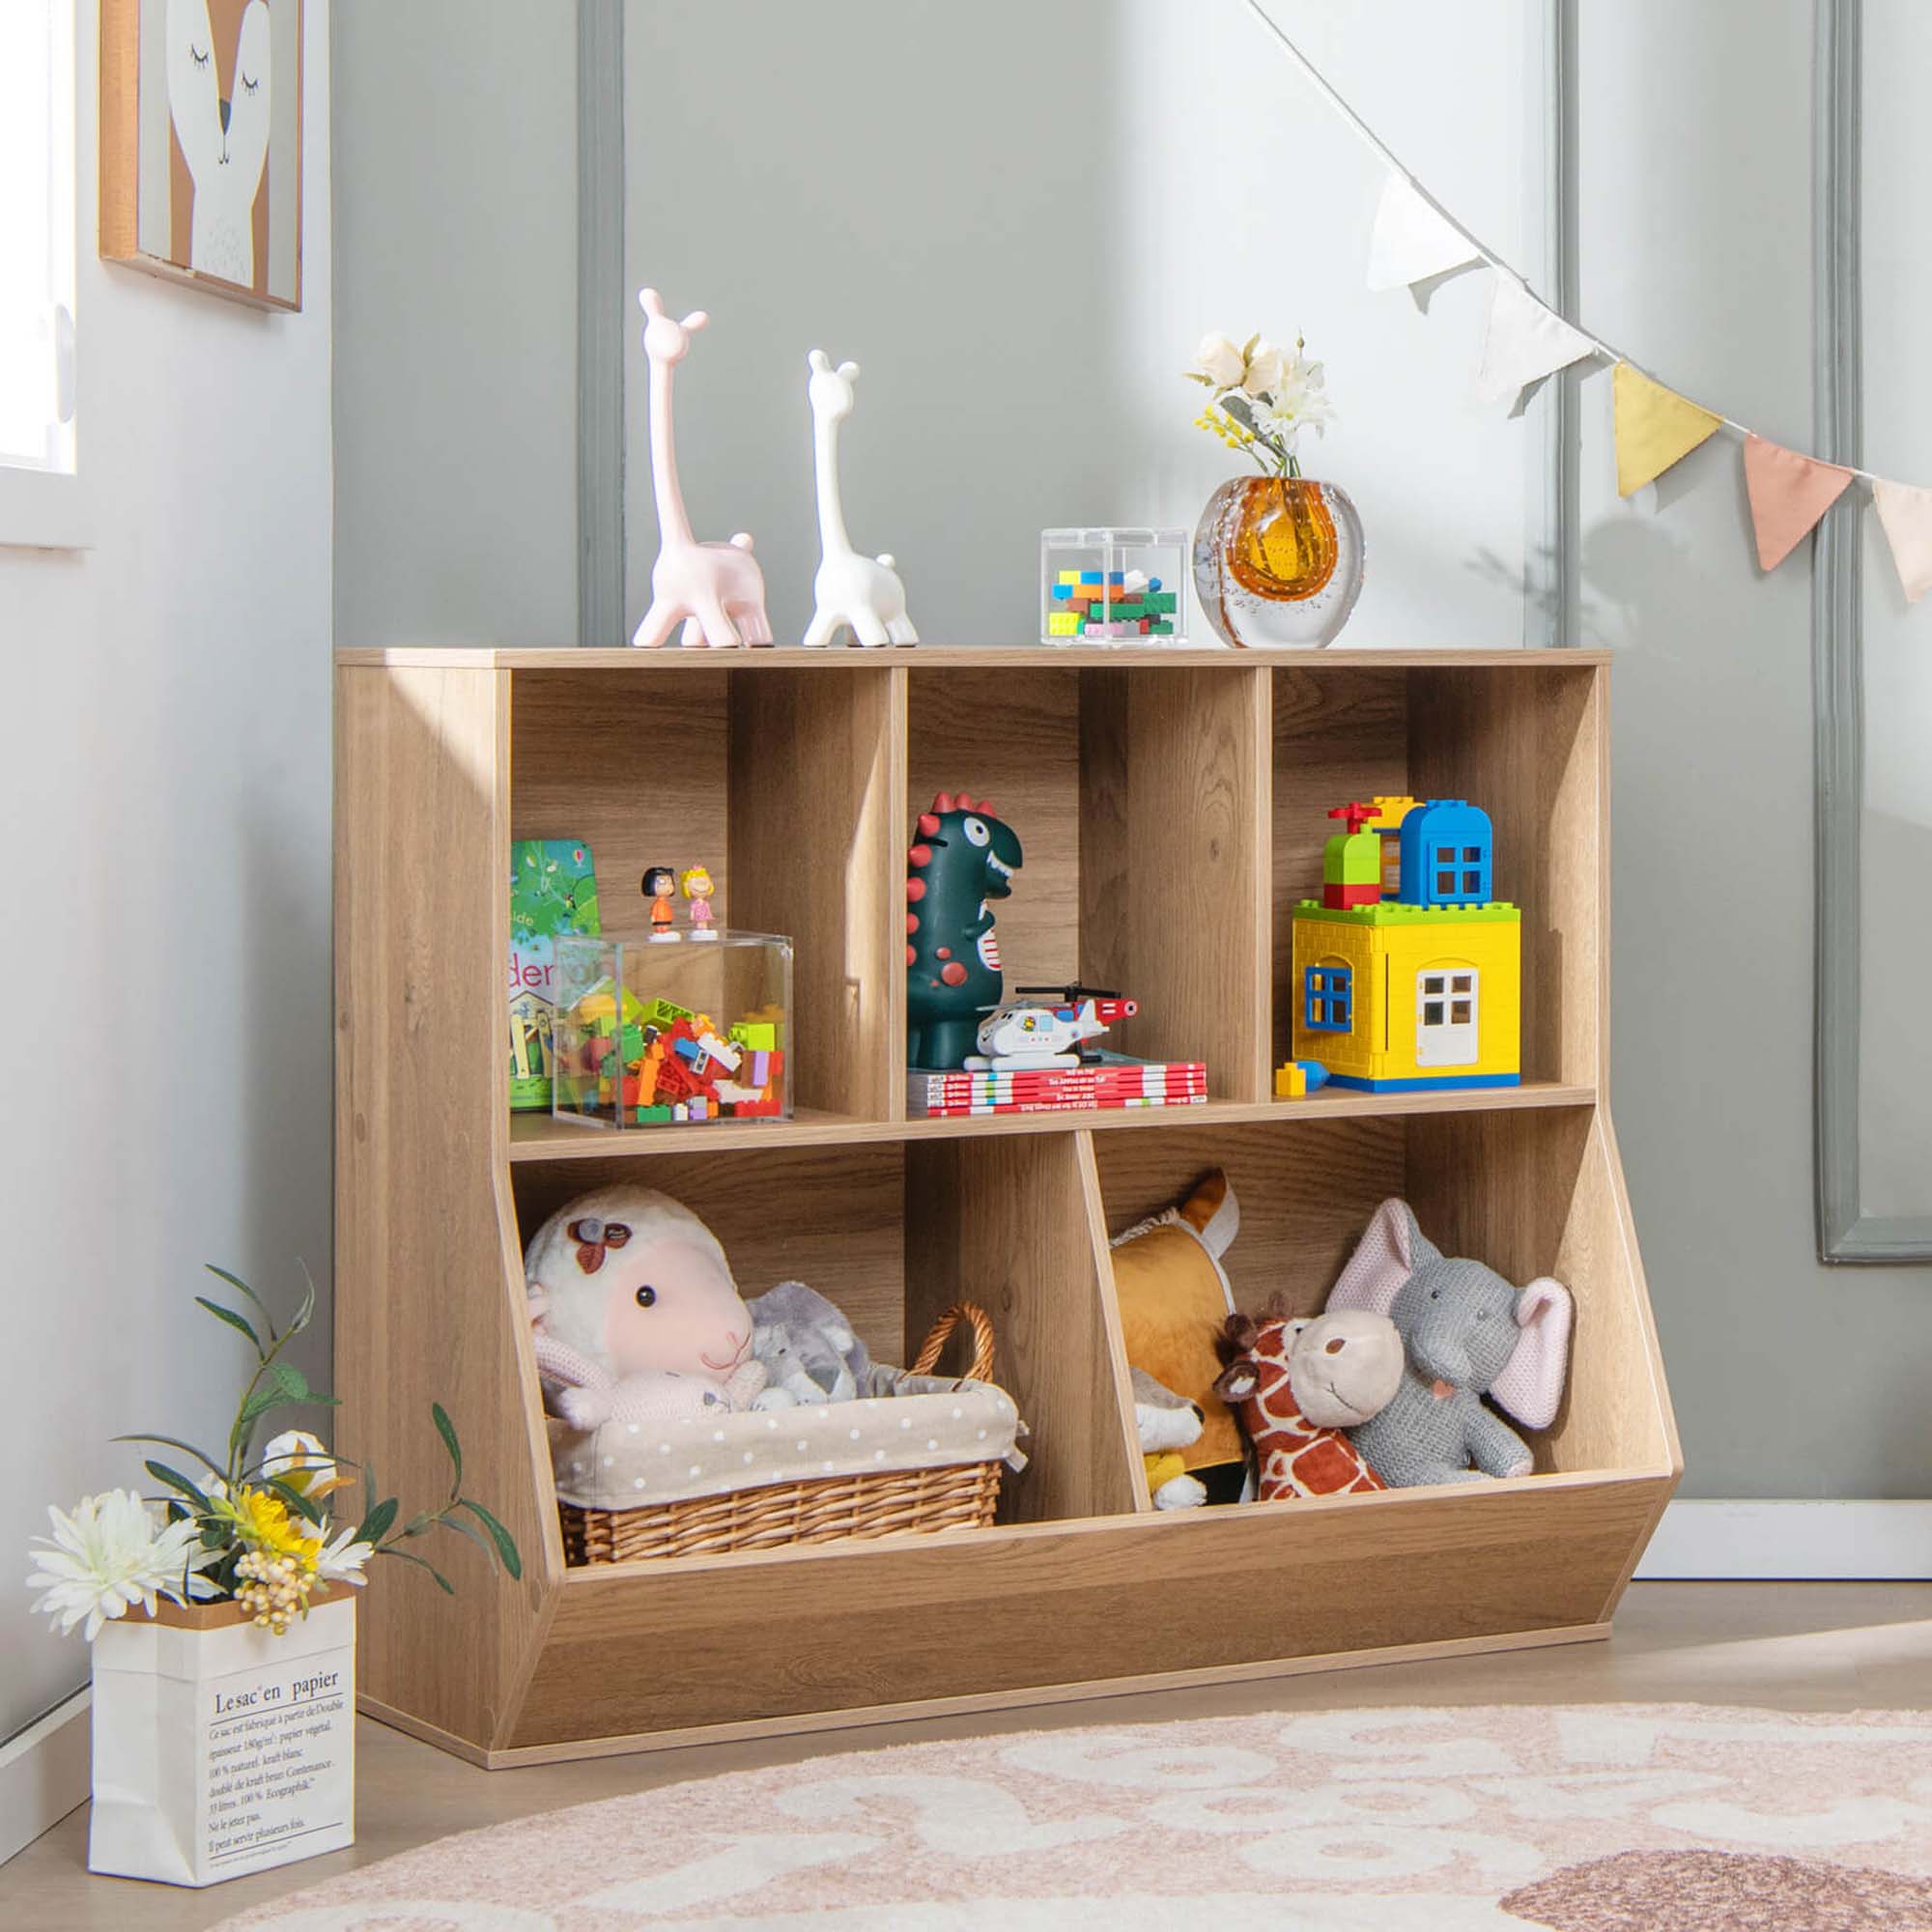 Costway 5-Cubby Kids Toy Storage Organizer Wooden Bookshelf Display Cabinet Natural - image 2 of 10